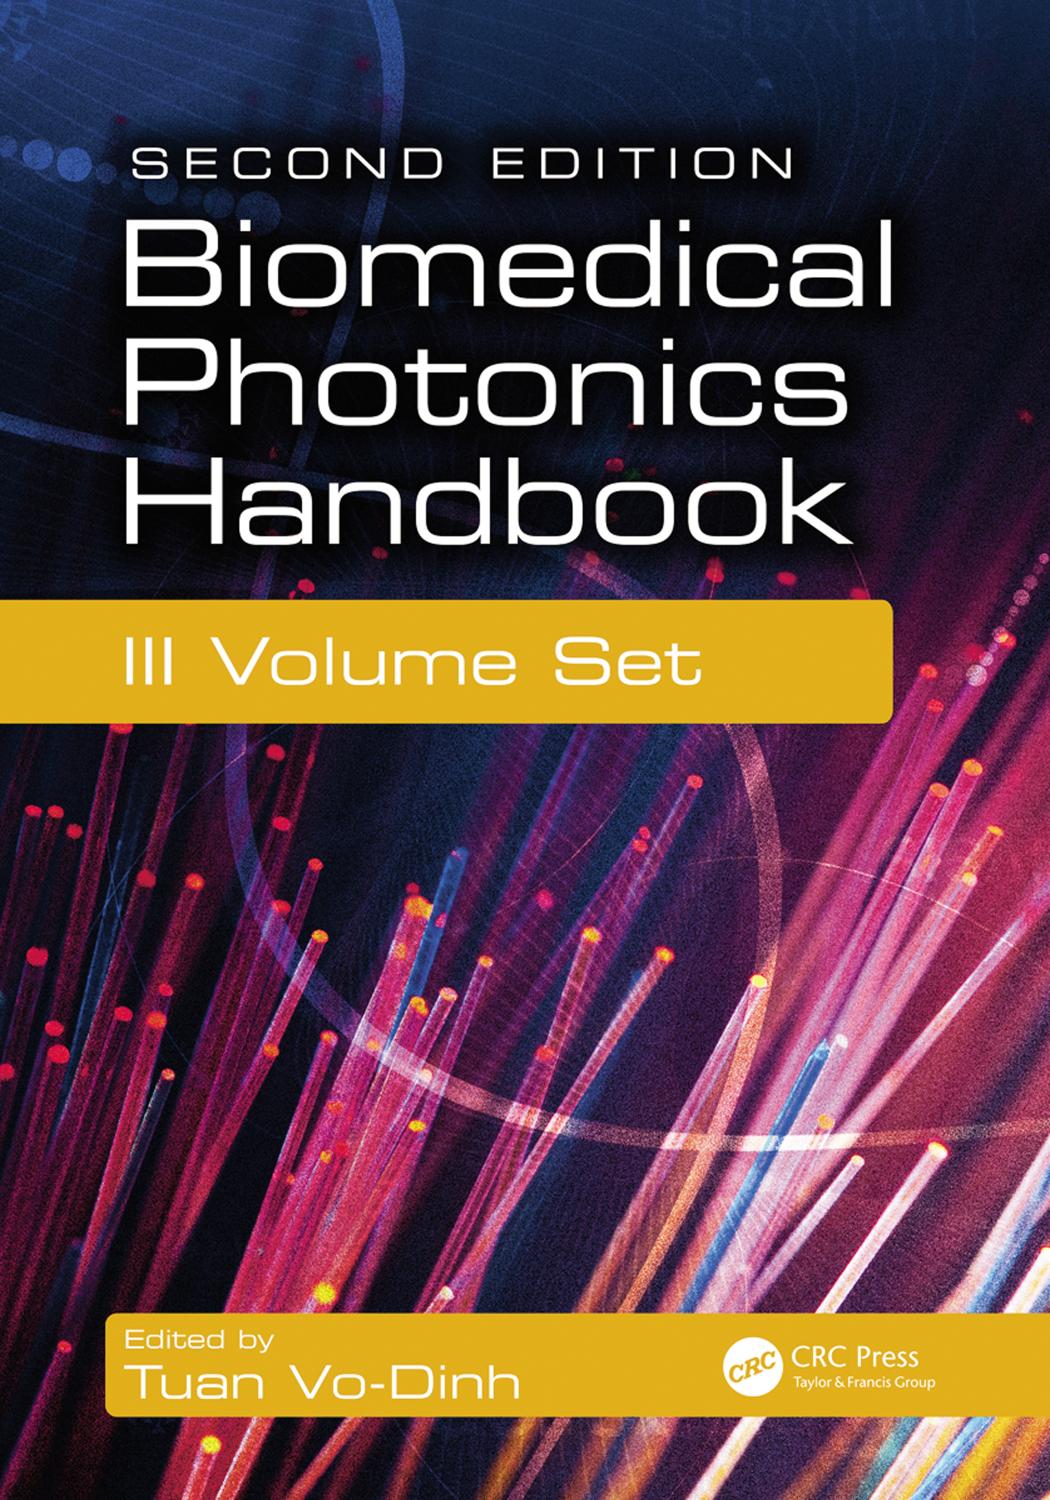 Biomedical photonics handbook. Volume 1, Fundamentals, devices, and techniques